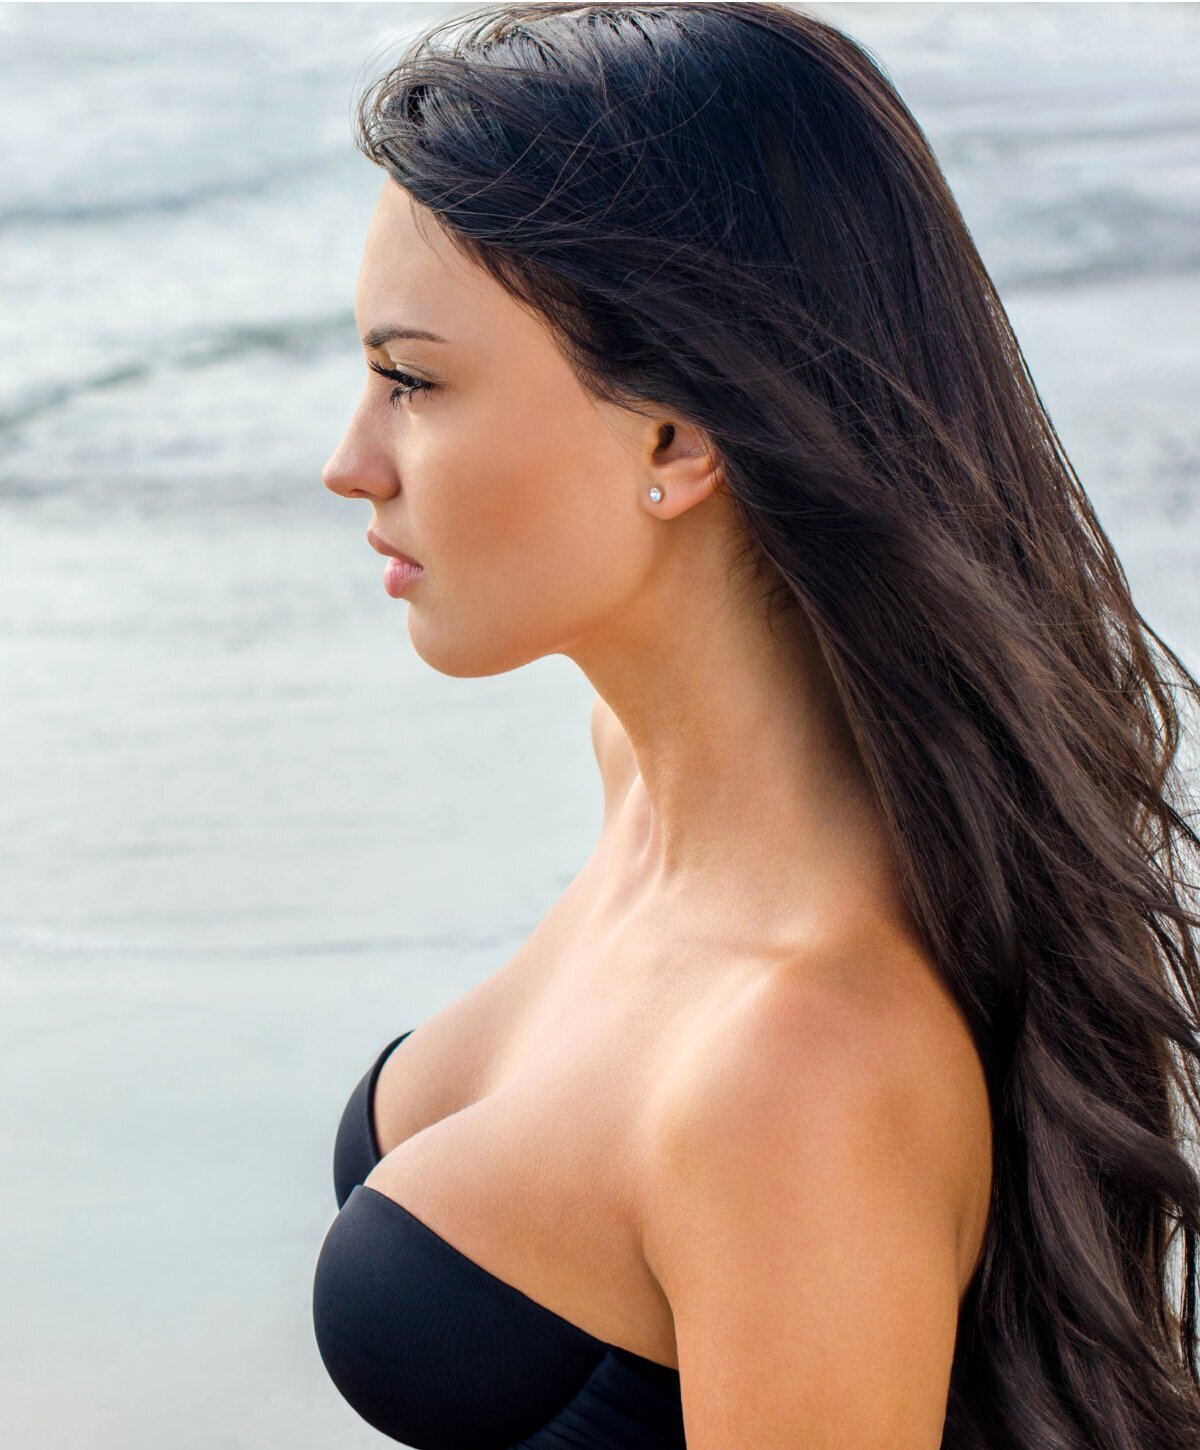 Miami breast augmentation model with black hair